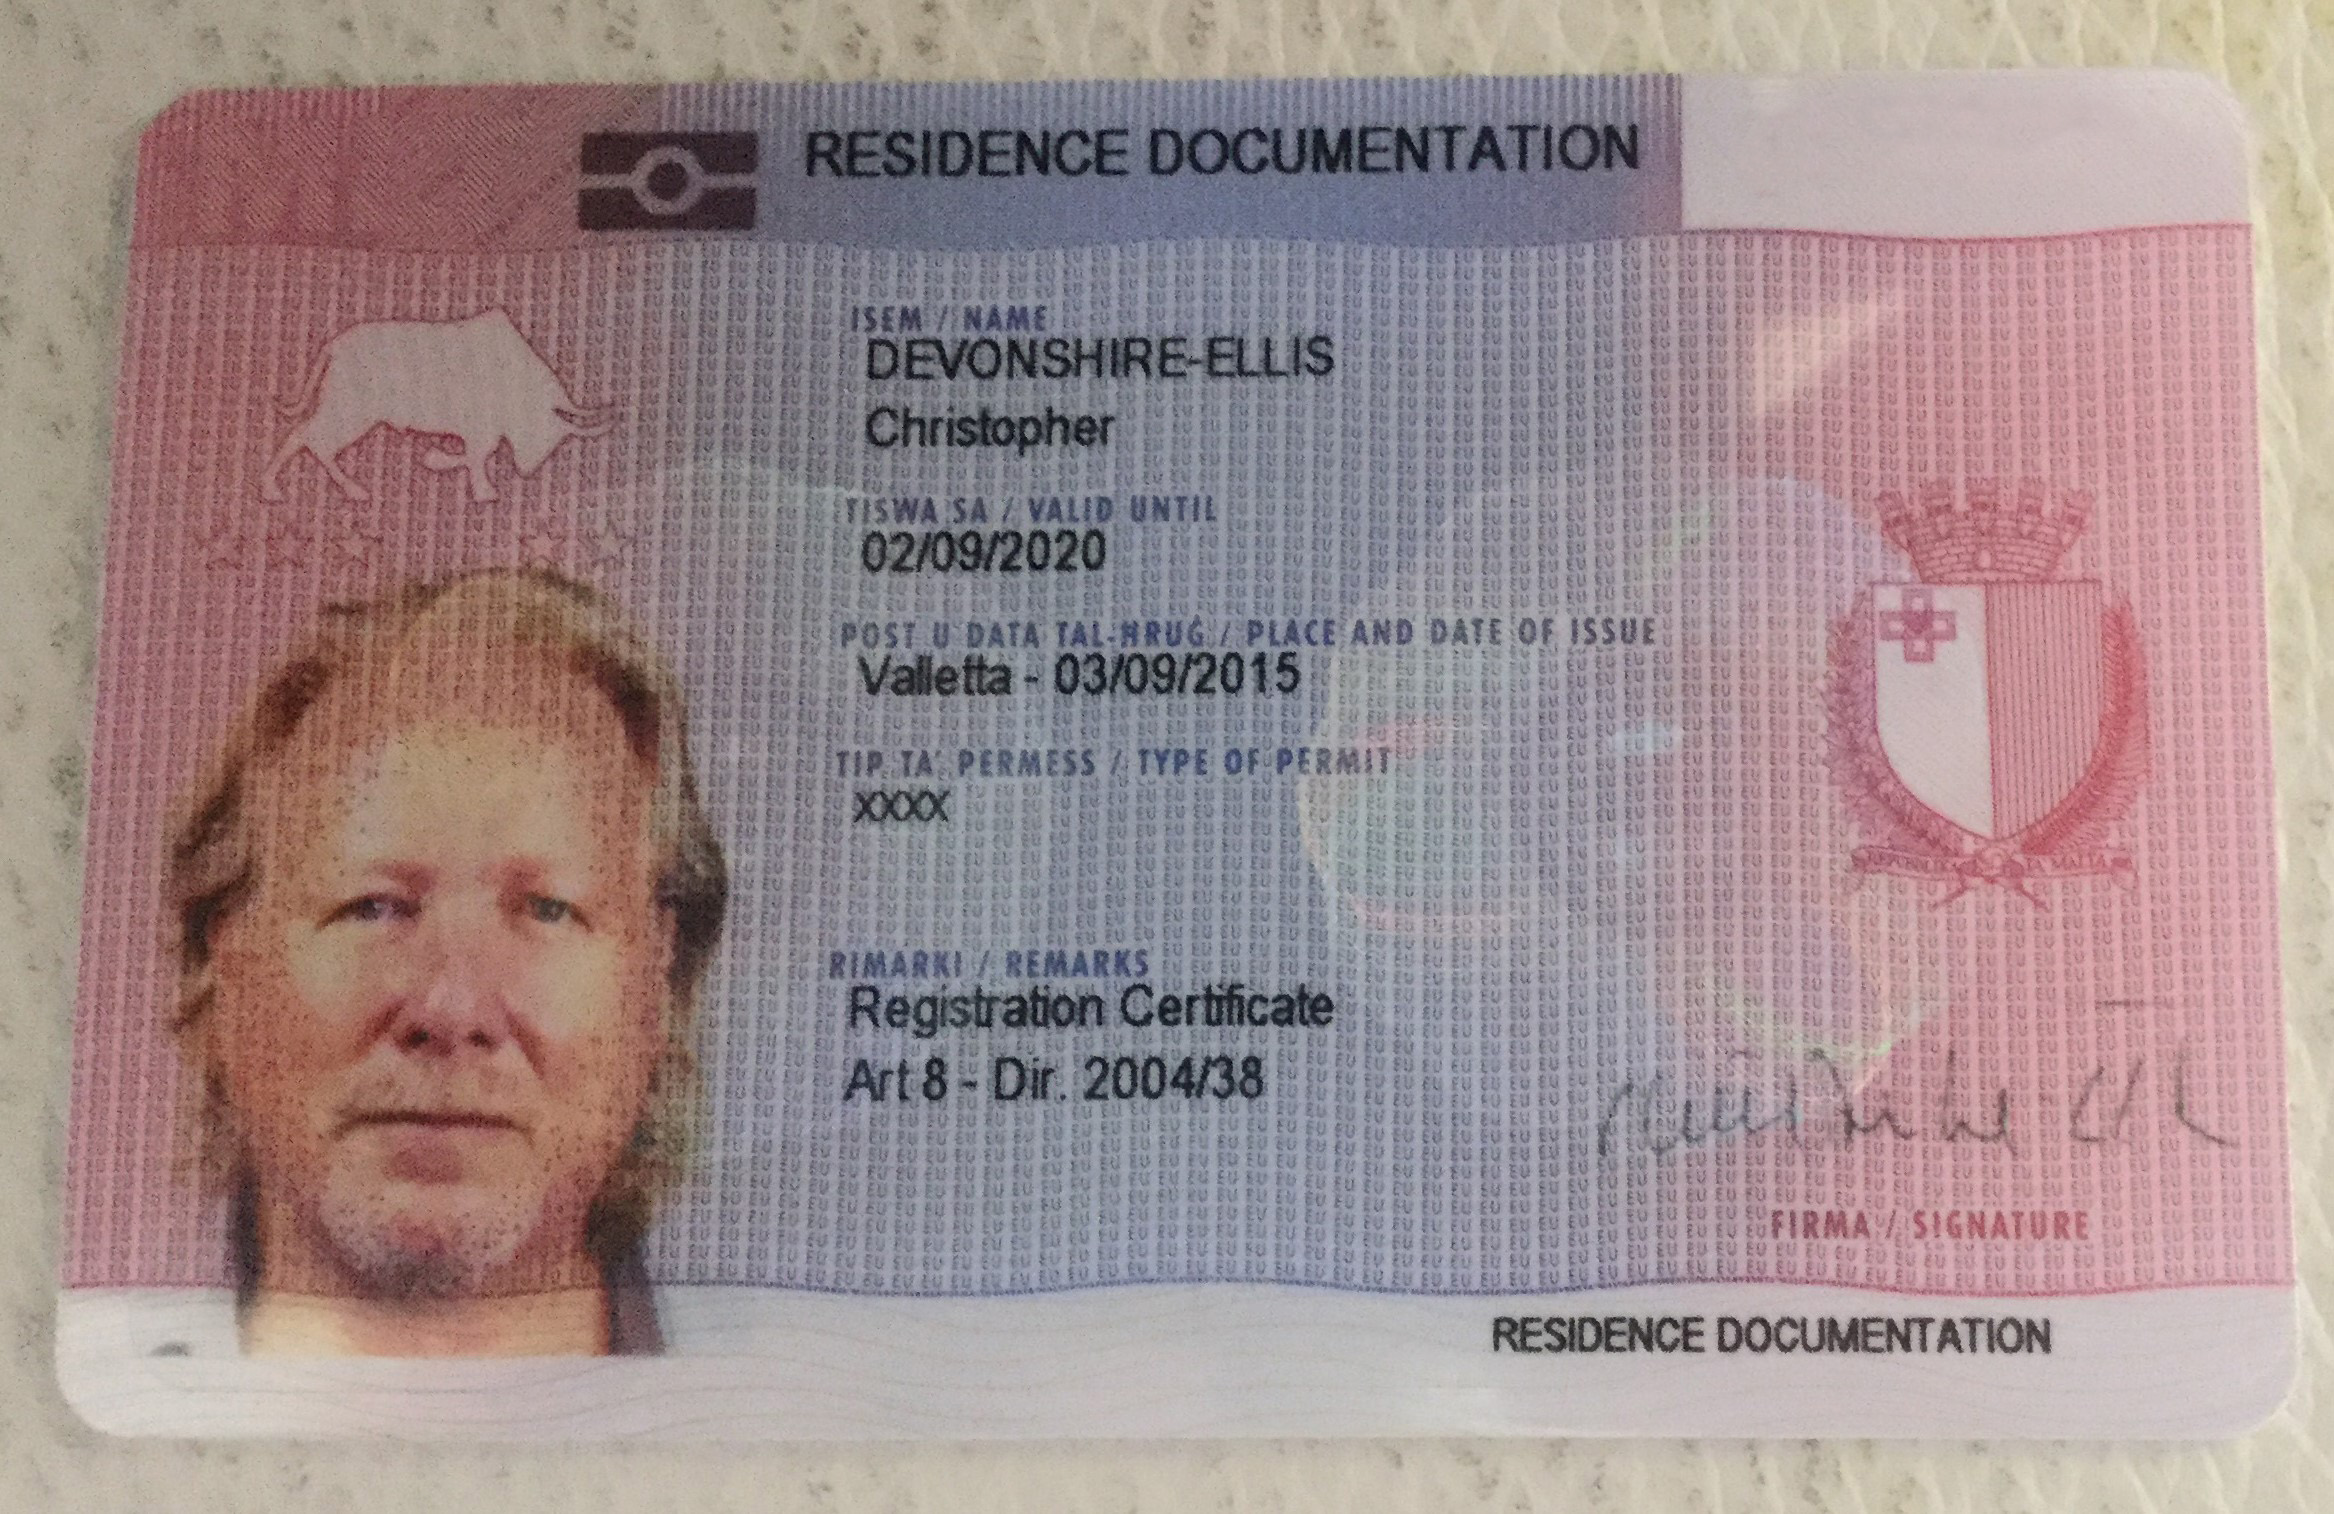 Devonshire-Ellis Malta Residency Granted - Chris Devonshire-Ellis